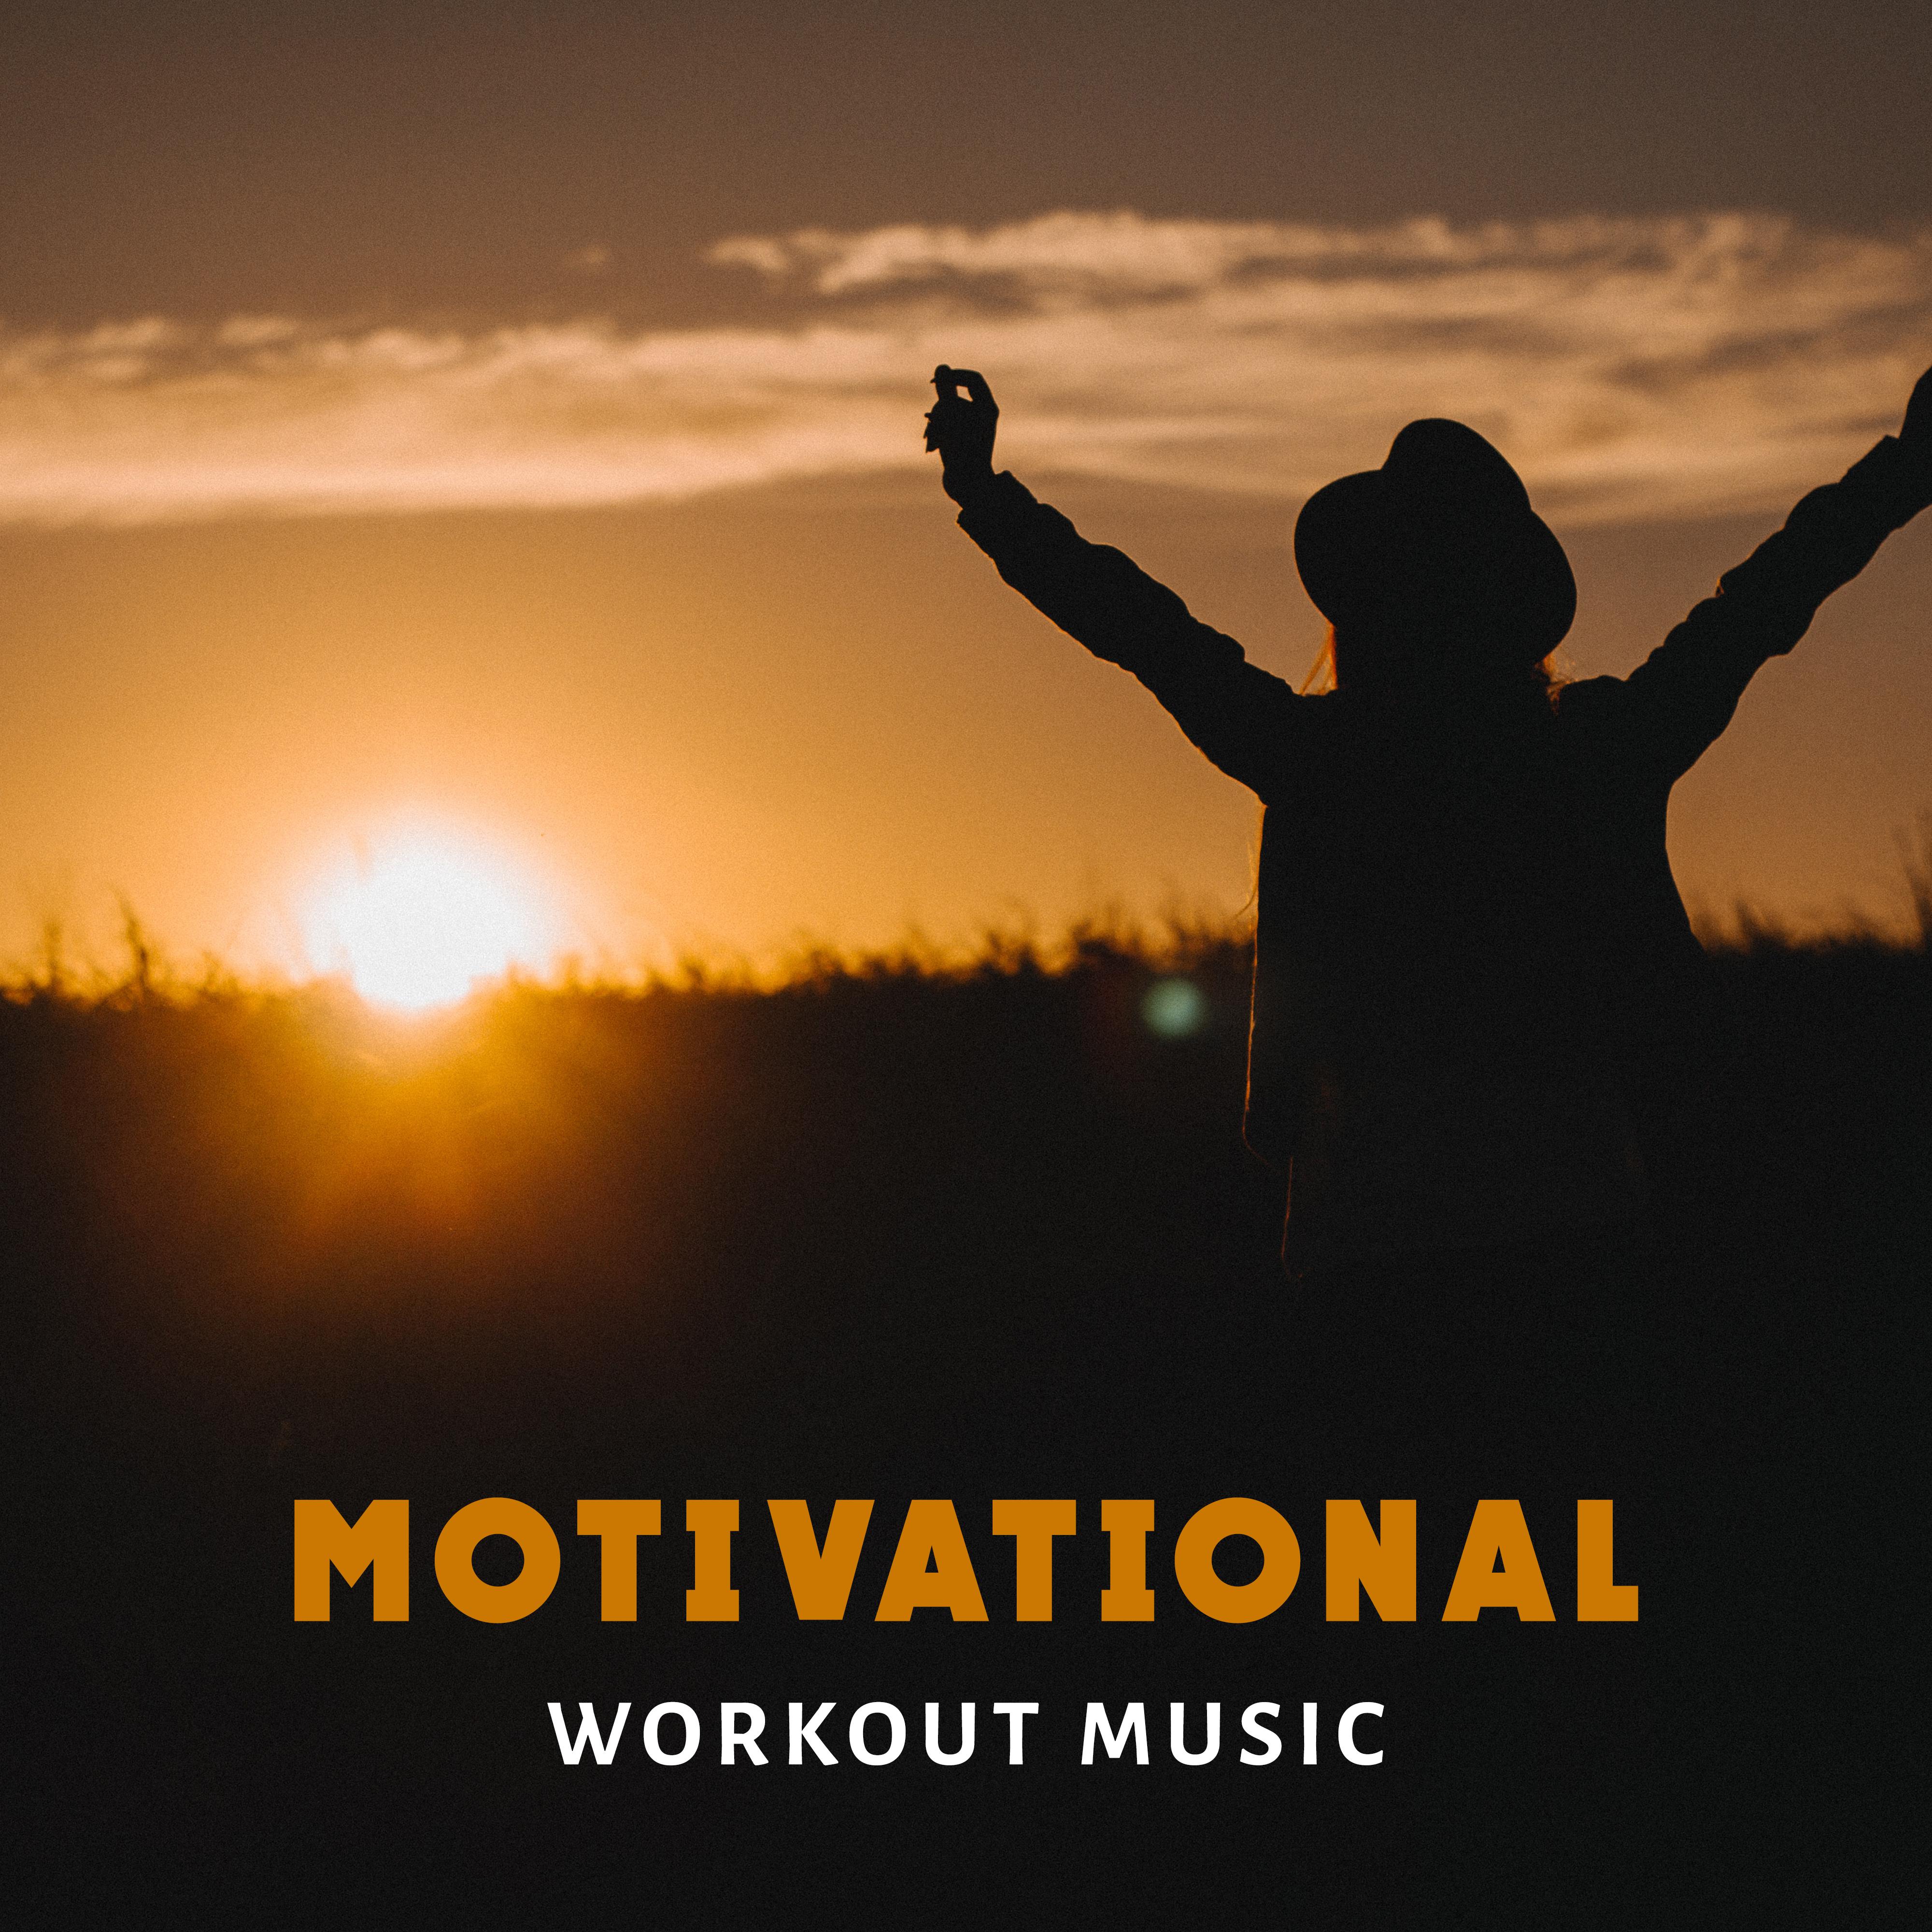 Motivational Workout Music